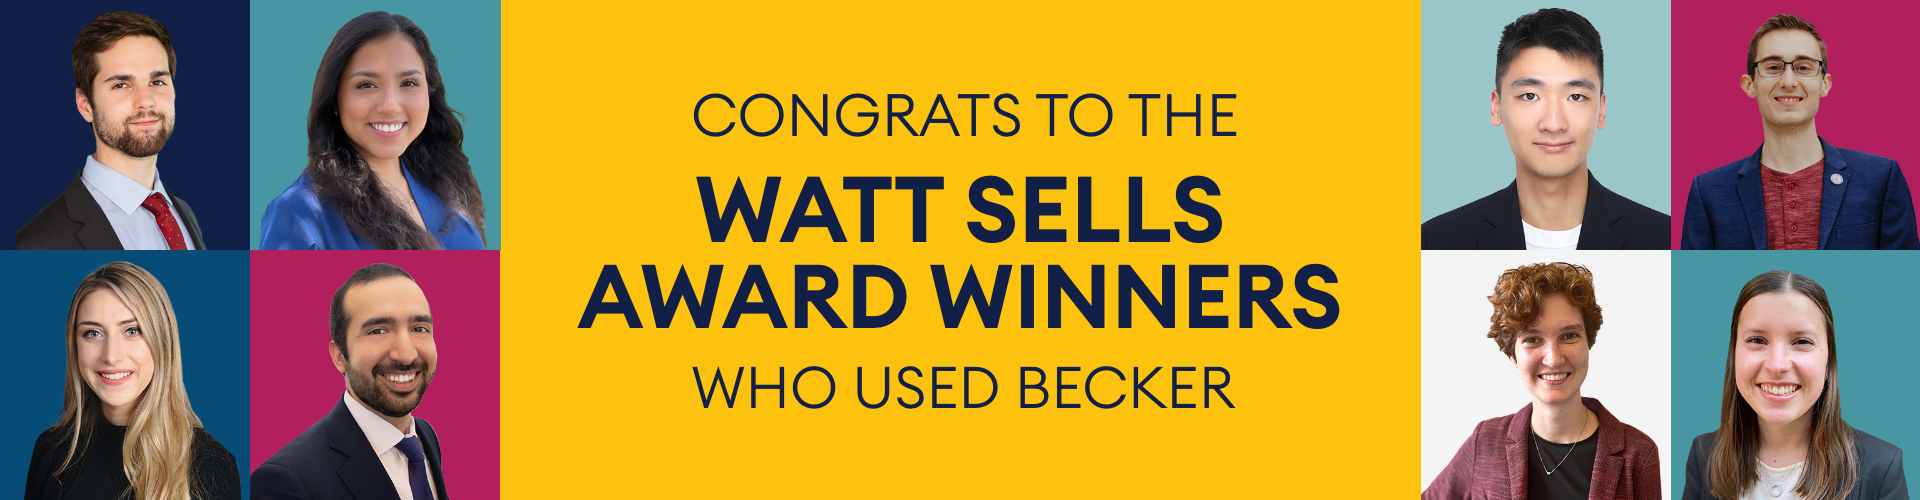 Congrats to the Watt Sells Award Winners